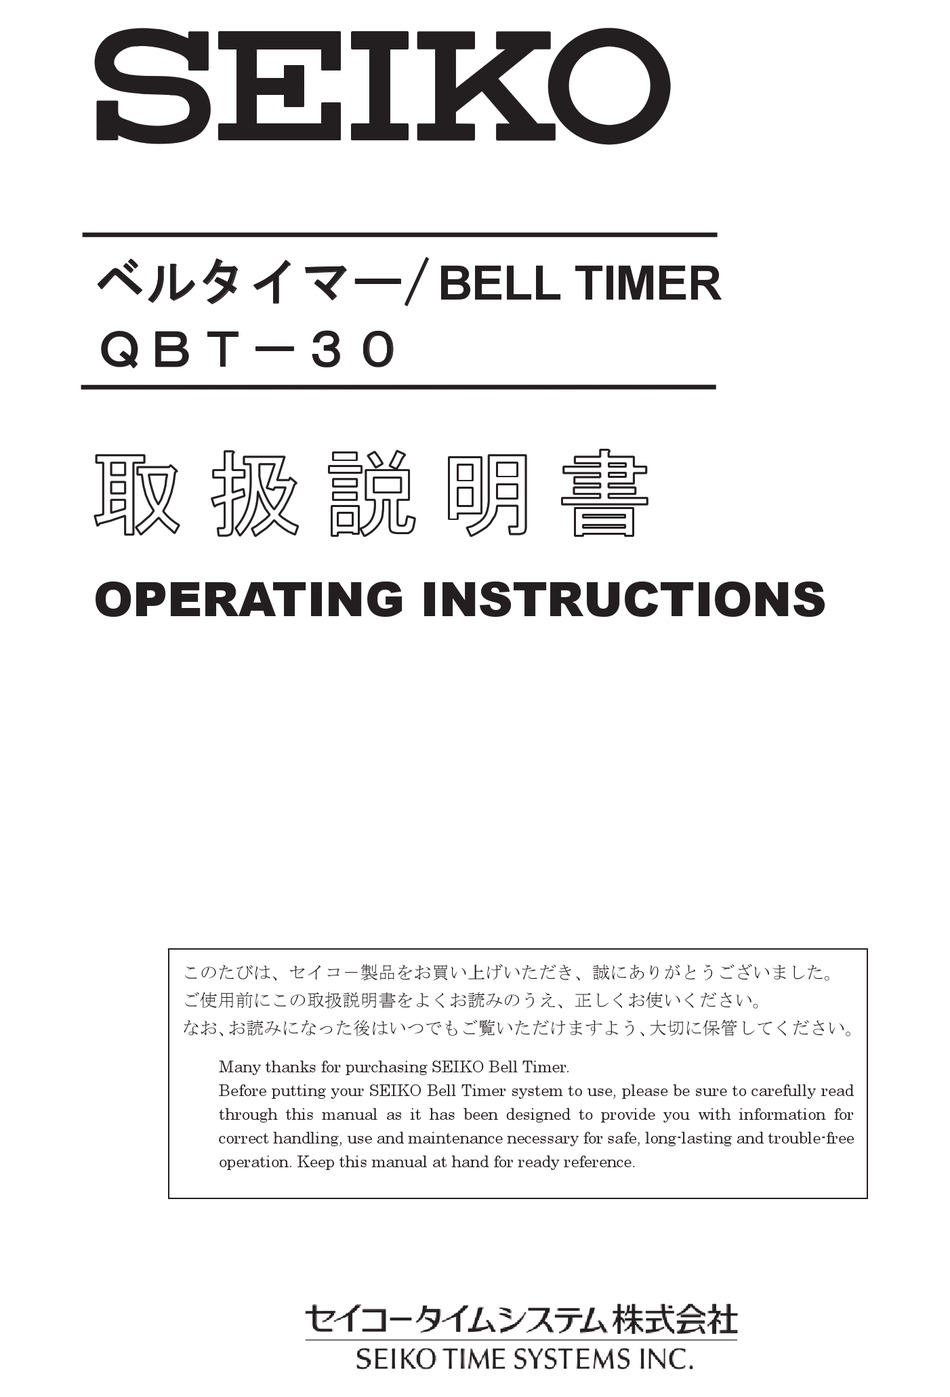 SEIKO QBT-30 OPERATING INSTRUCTIONS MANUAL Pdf Download | ManualsLib